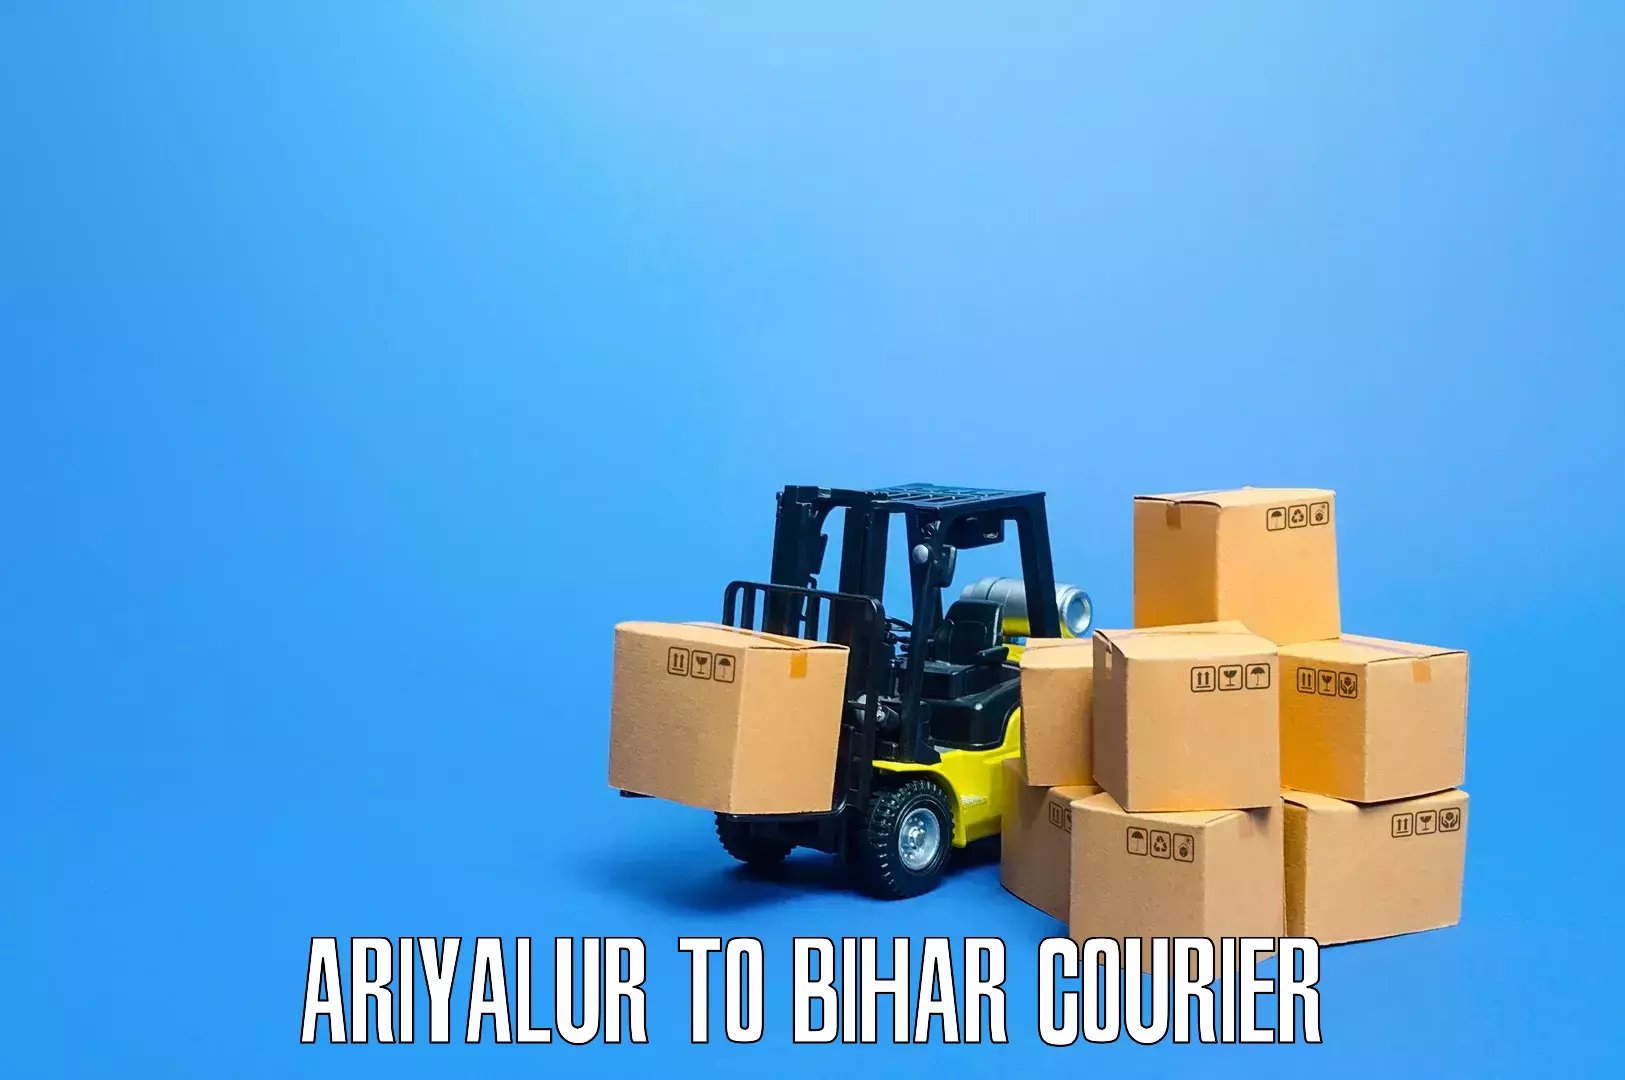 Professional moving company Ariyalur to Bihar